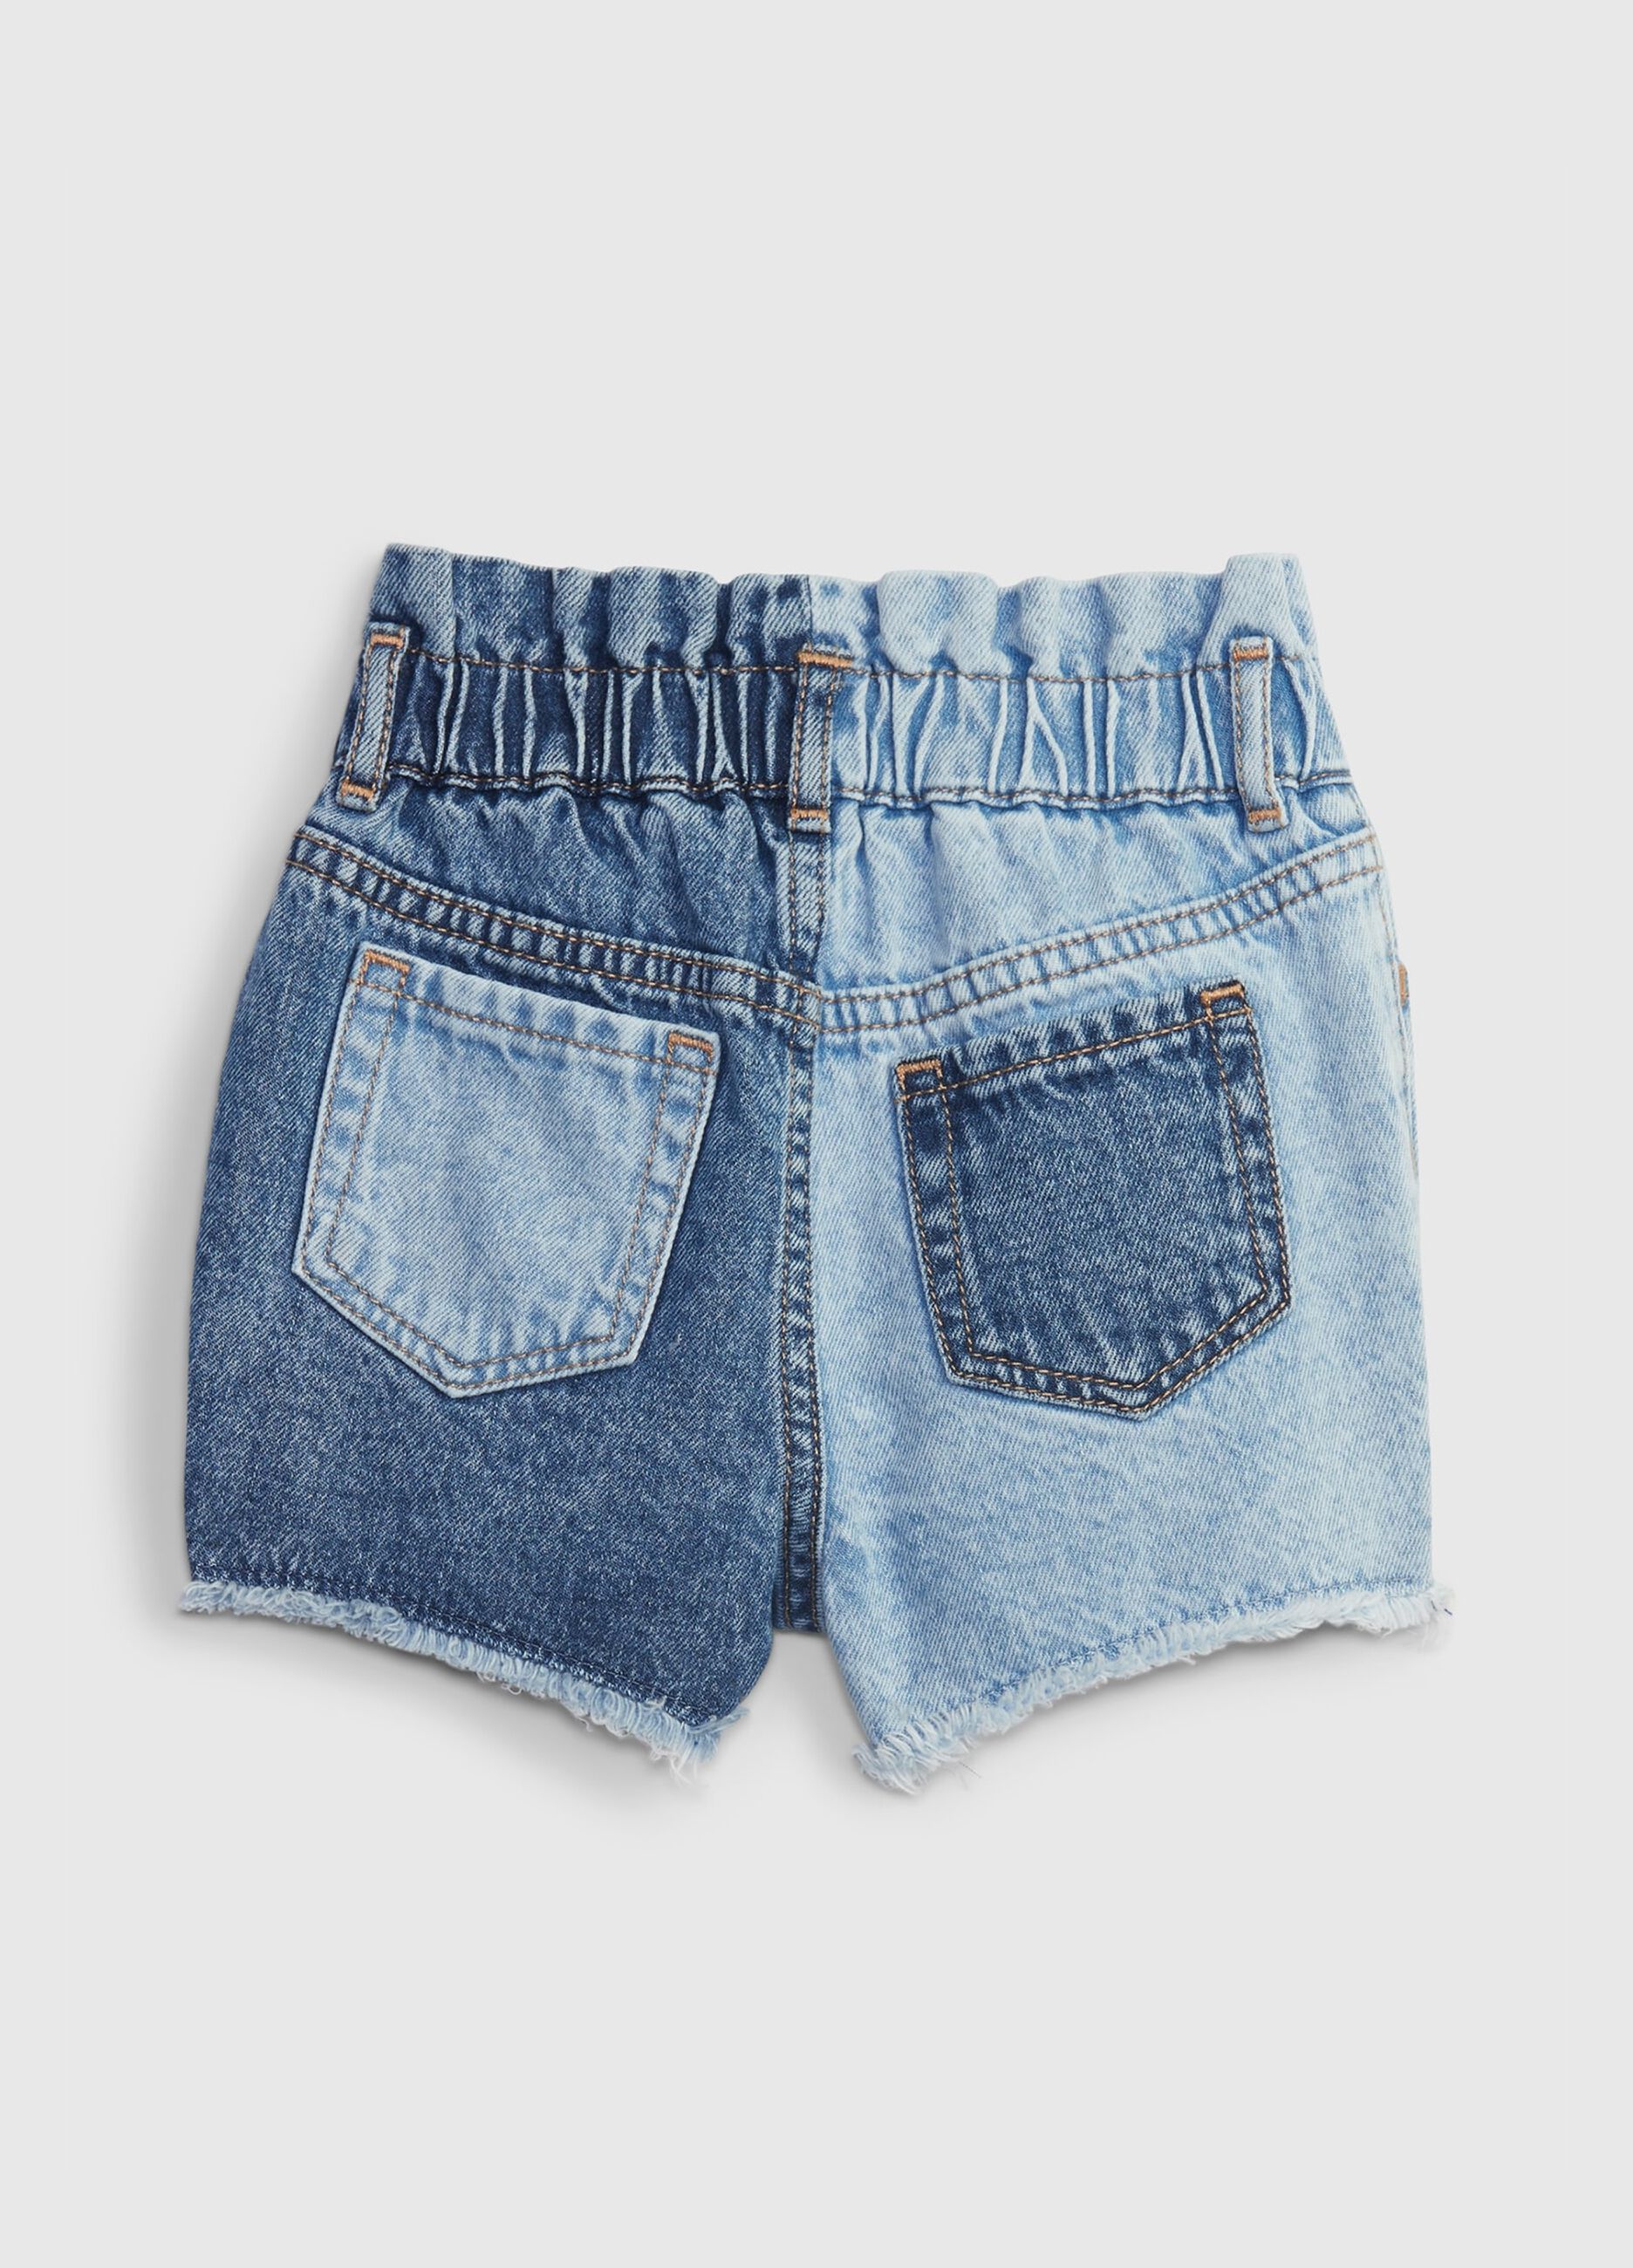 Mum-fit shorts in two-tone denim.